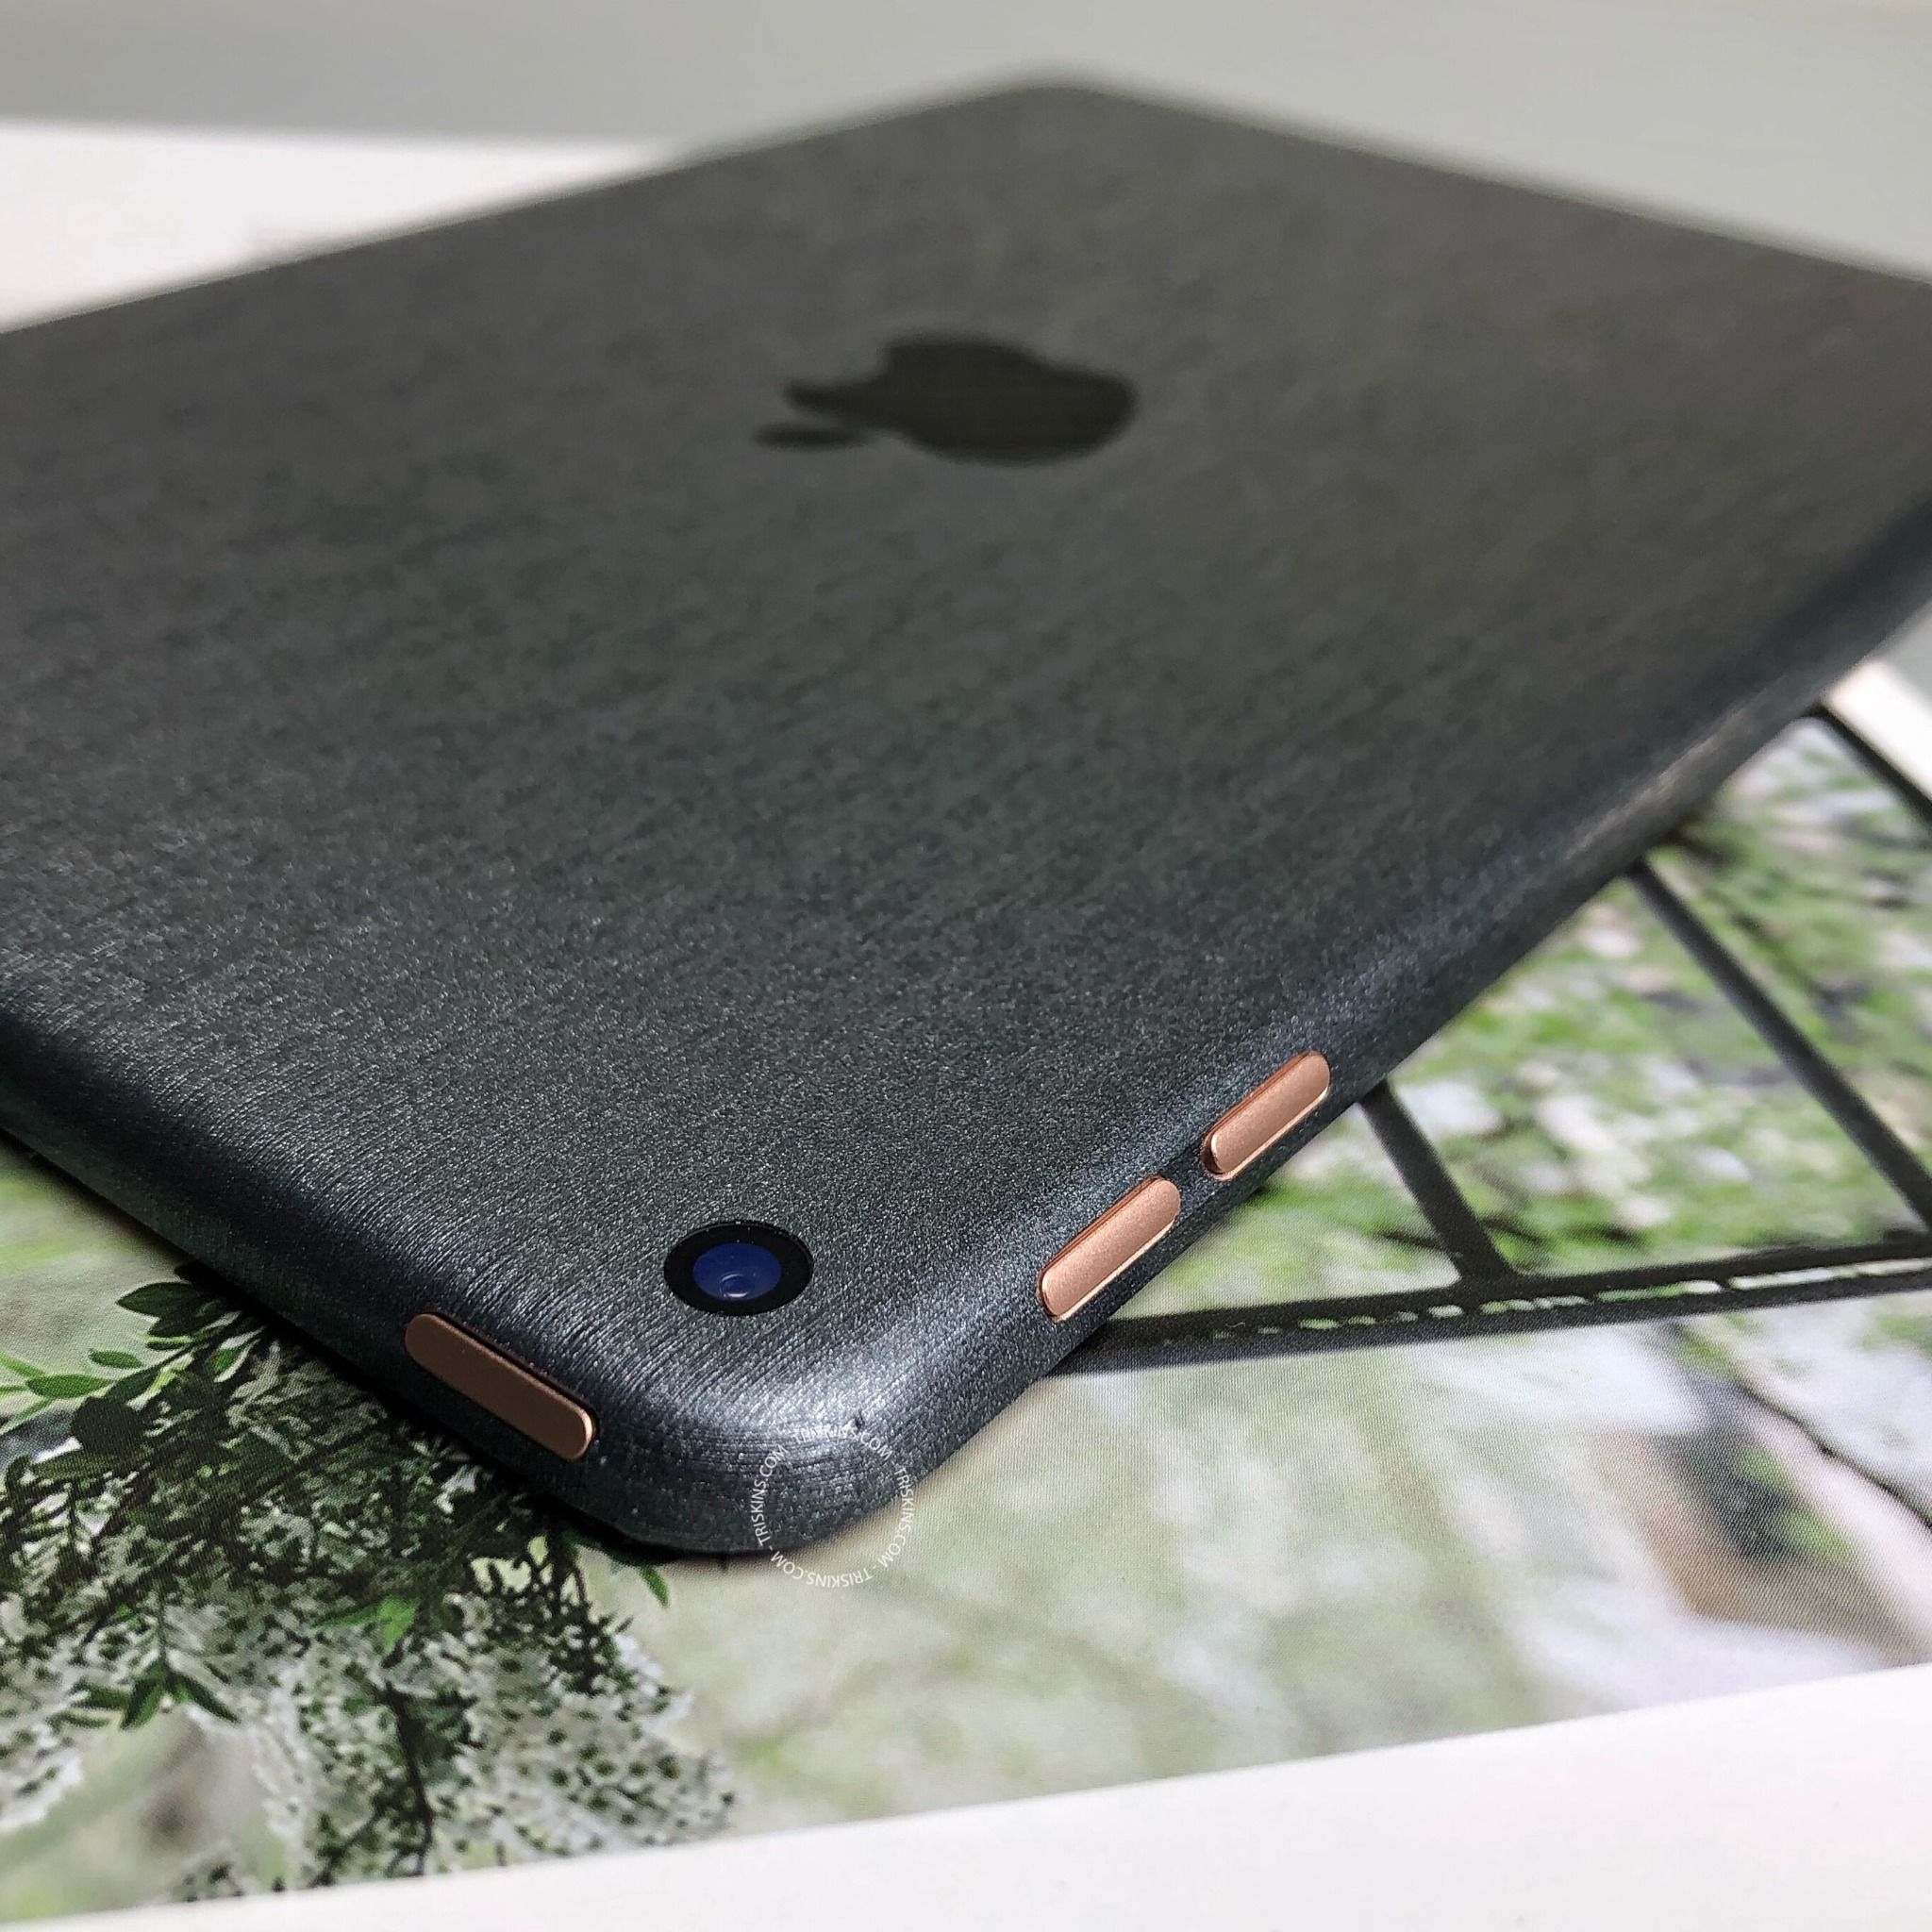  Dán Skin 3M iPad Pro 11 inch 12.9 inch - Brushed Steel  By TRISKINS 